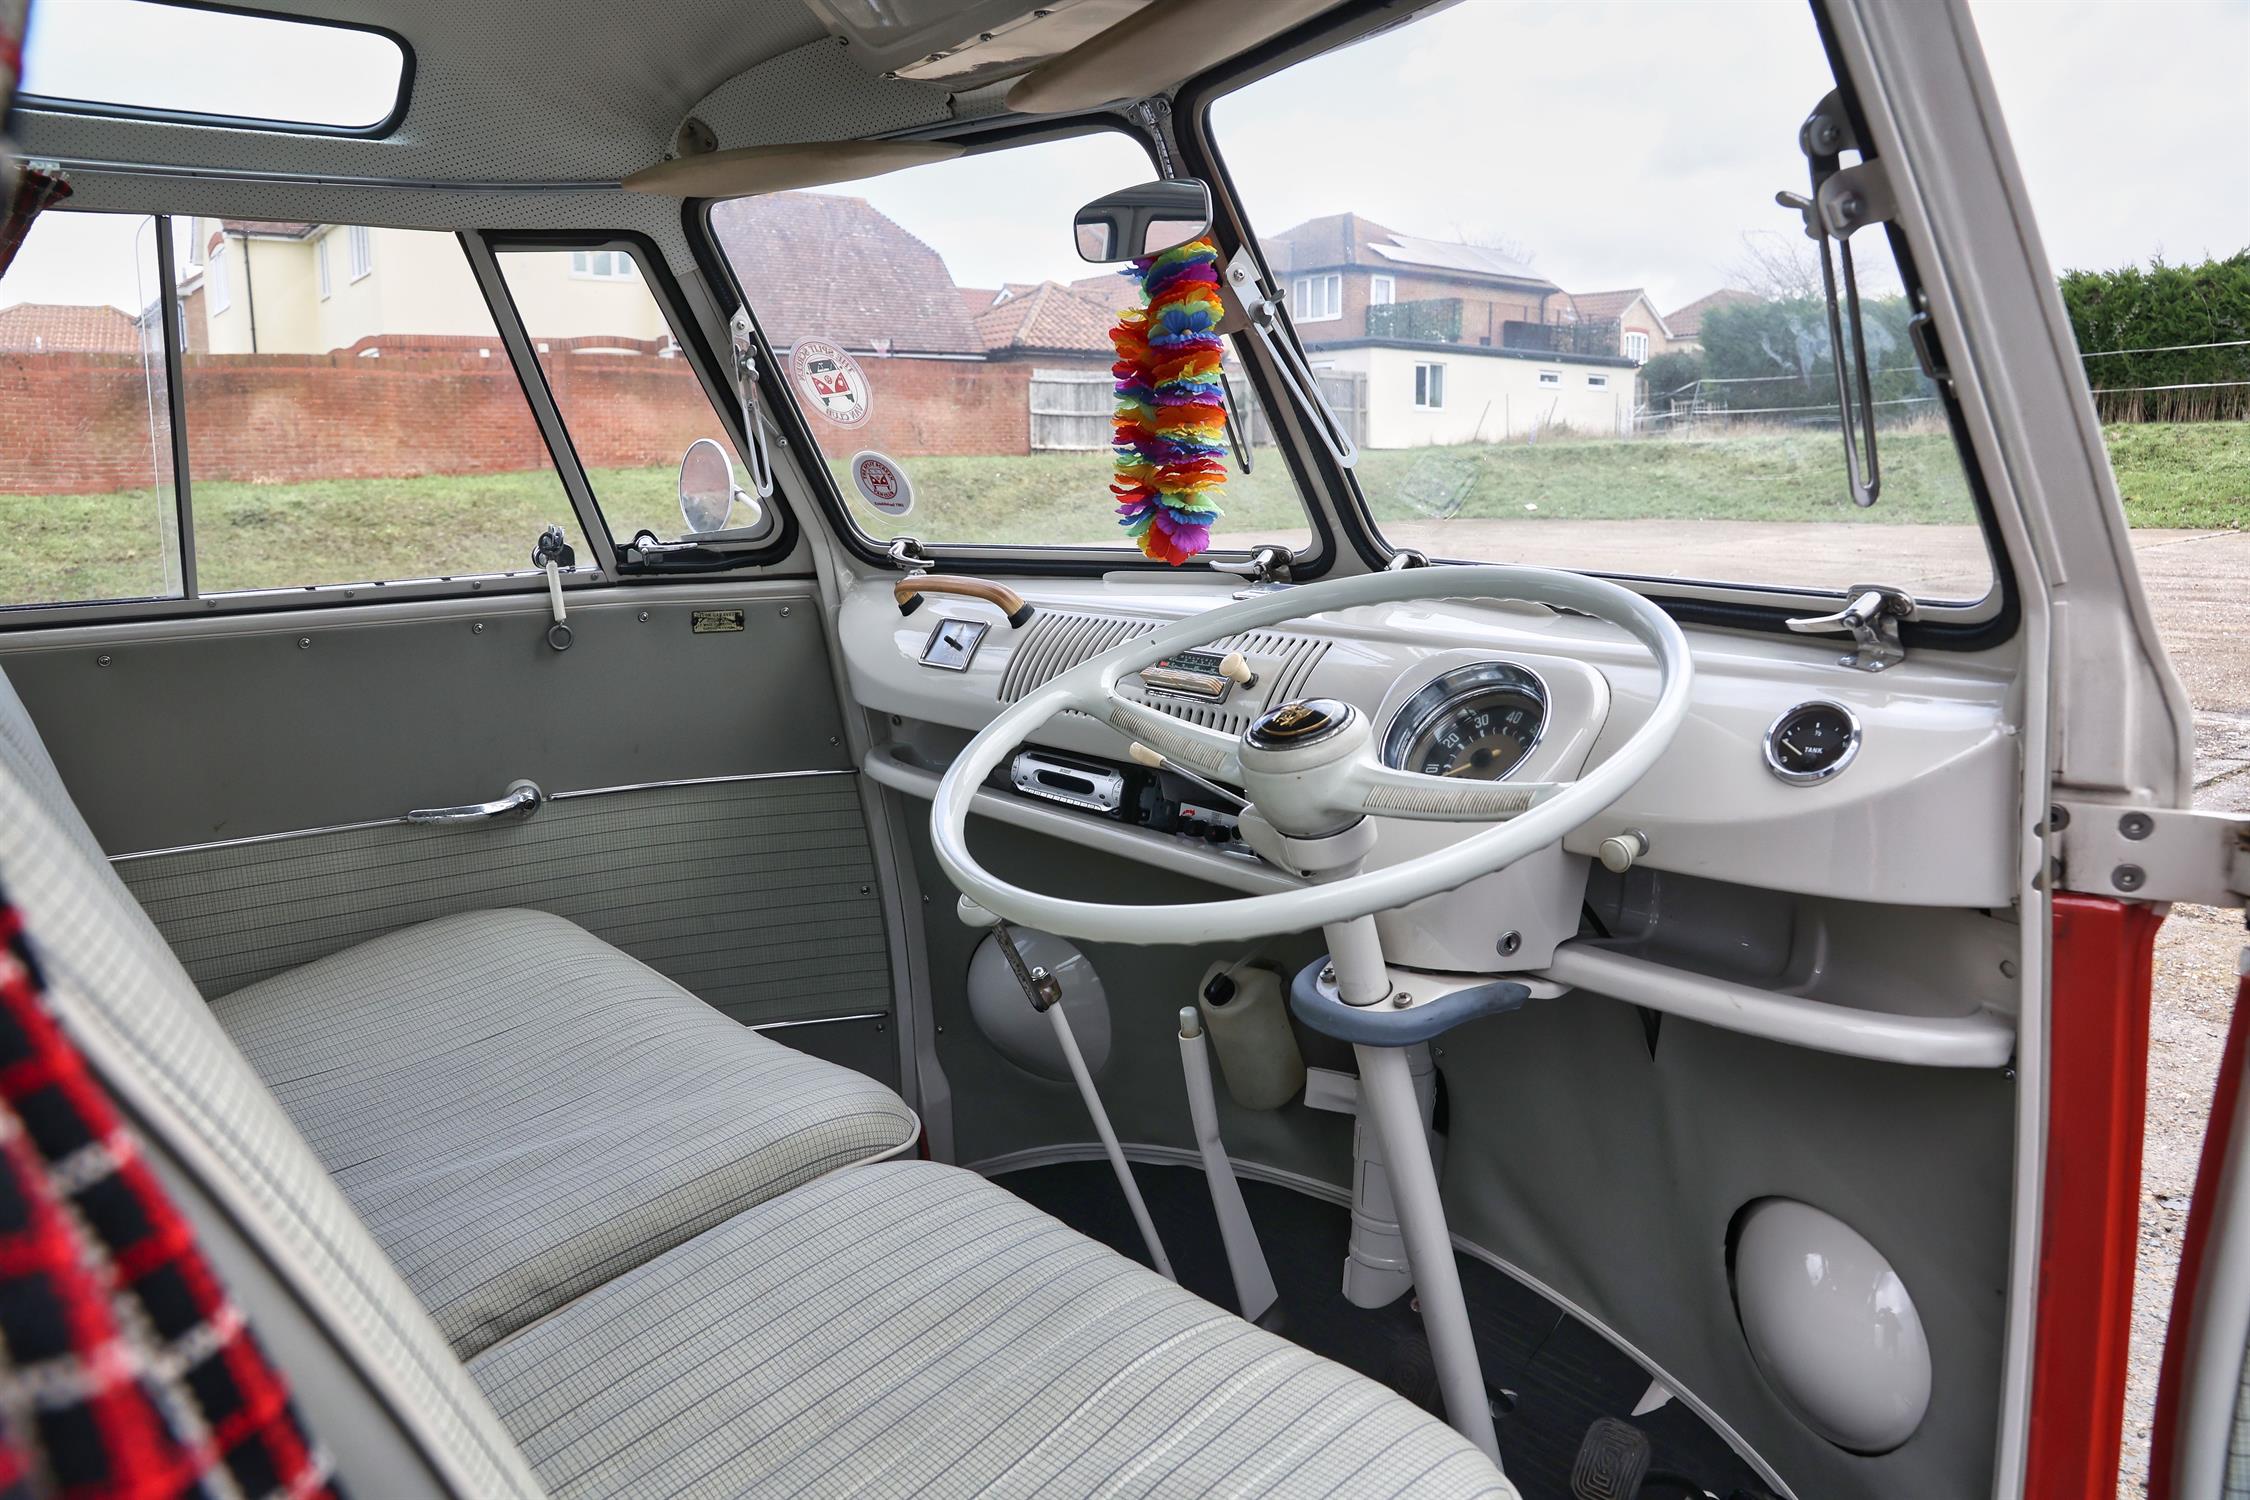 **Regretfully Withdrawn** 1964 Volkswagen Type 2 (T1) Microbus Deluxe 21-window 'Samba' - RHD - Image 2 of 10